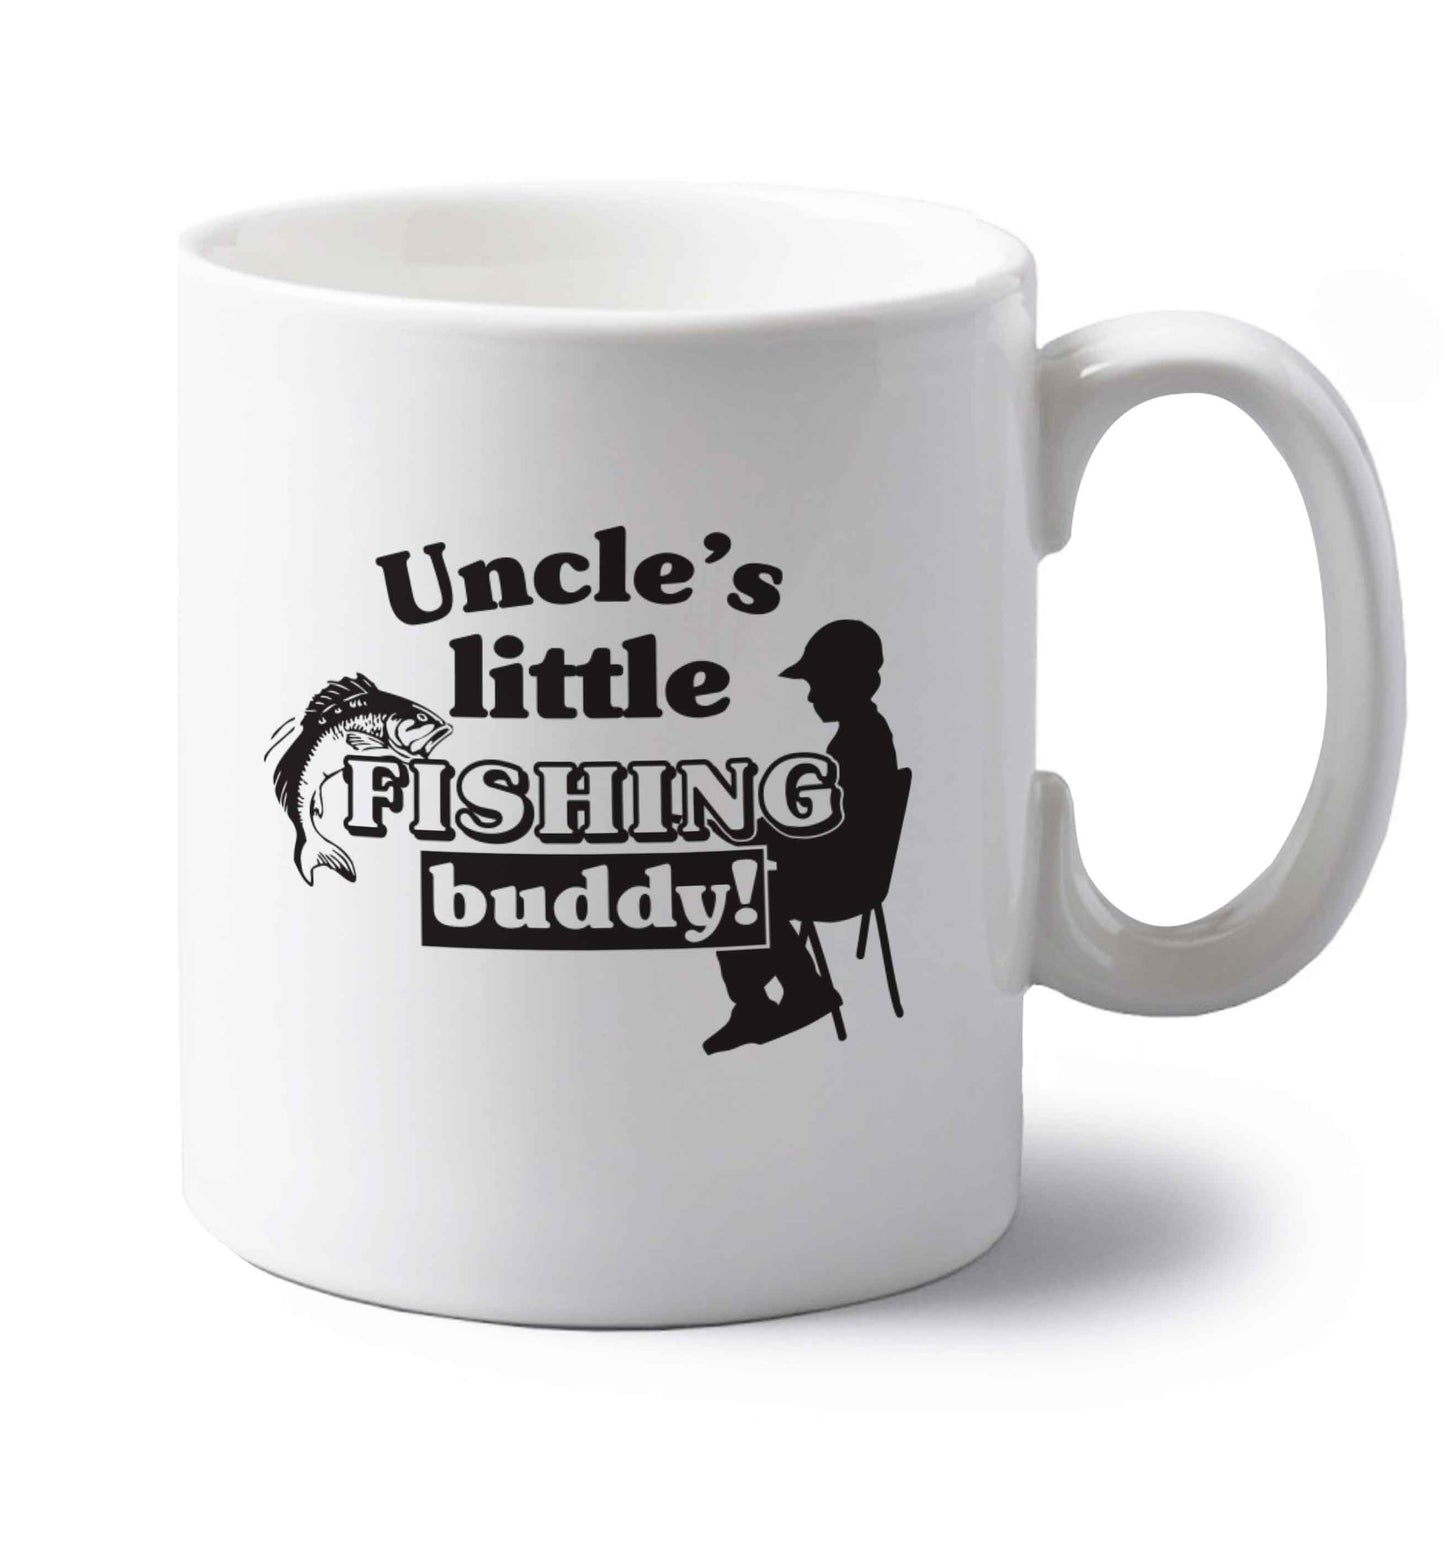 Uncle's little fishing buddy left handed white ceramic mug 